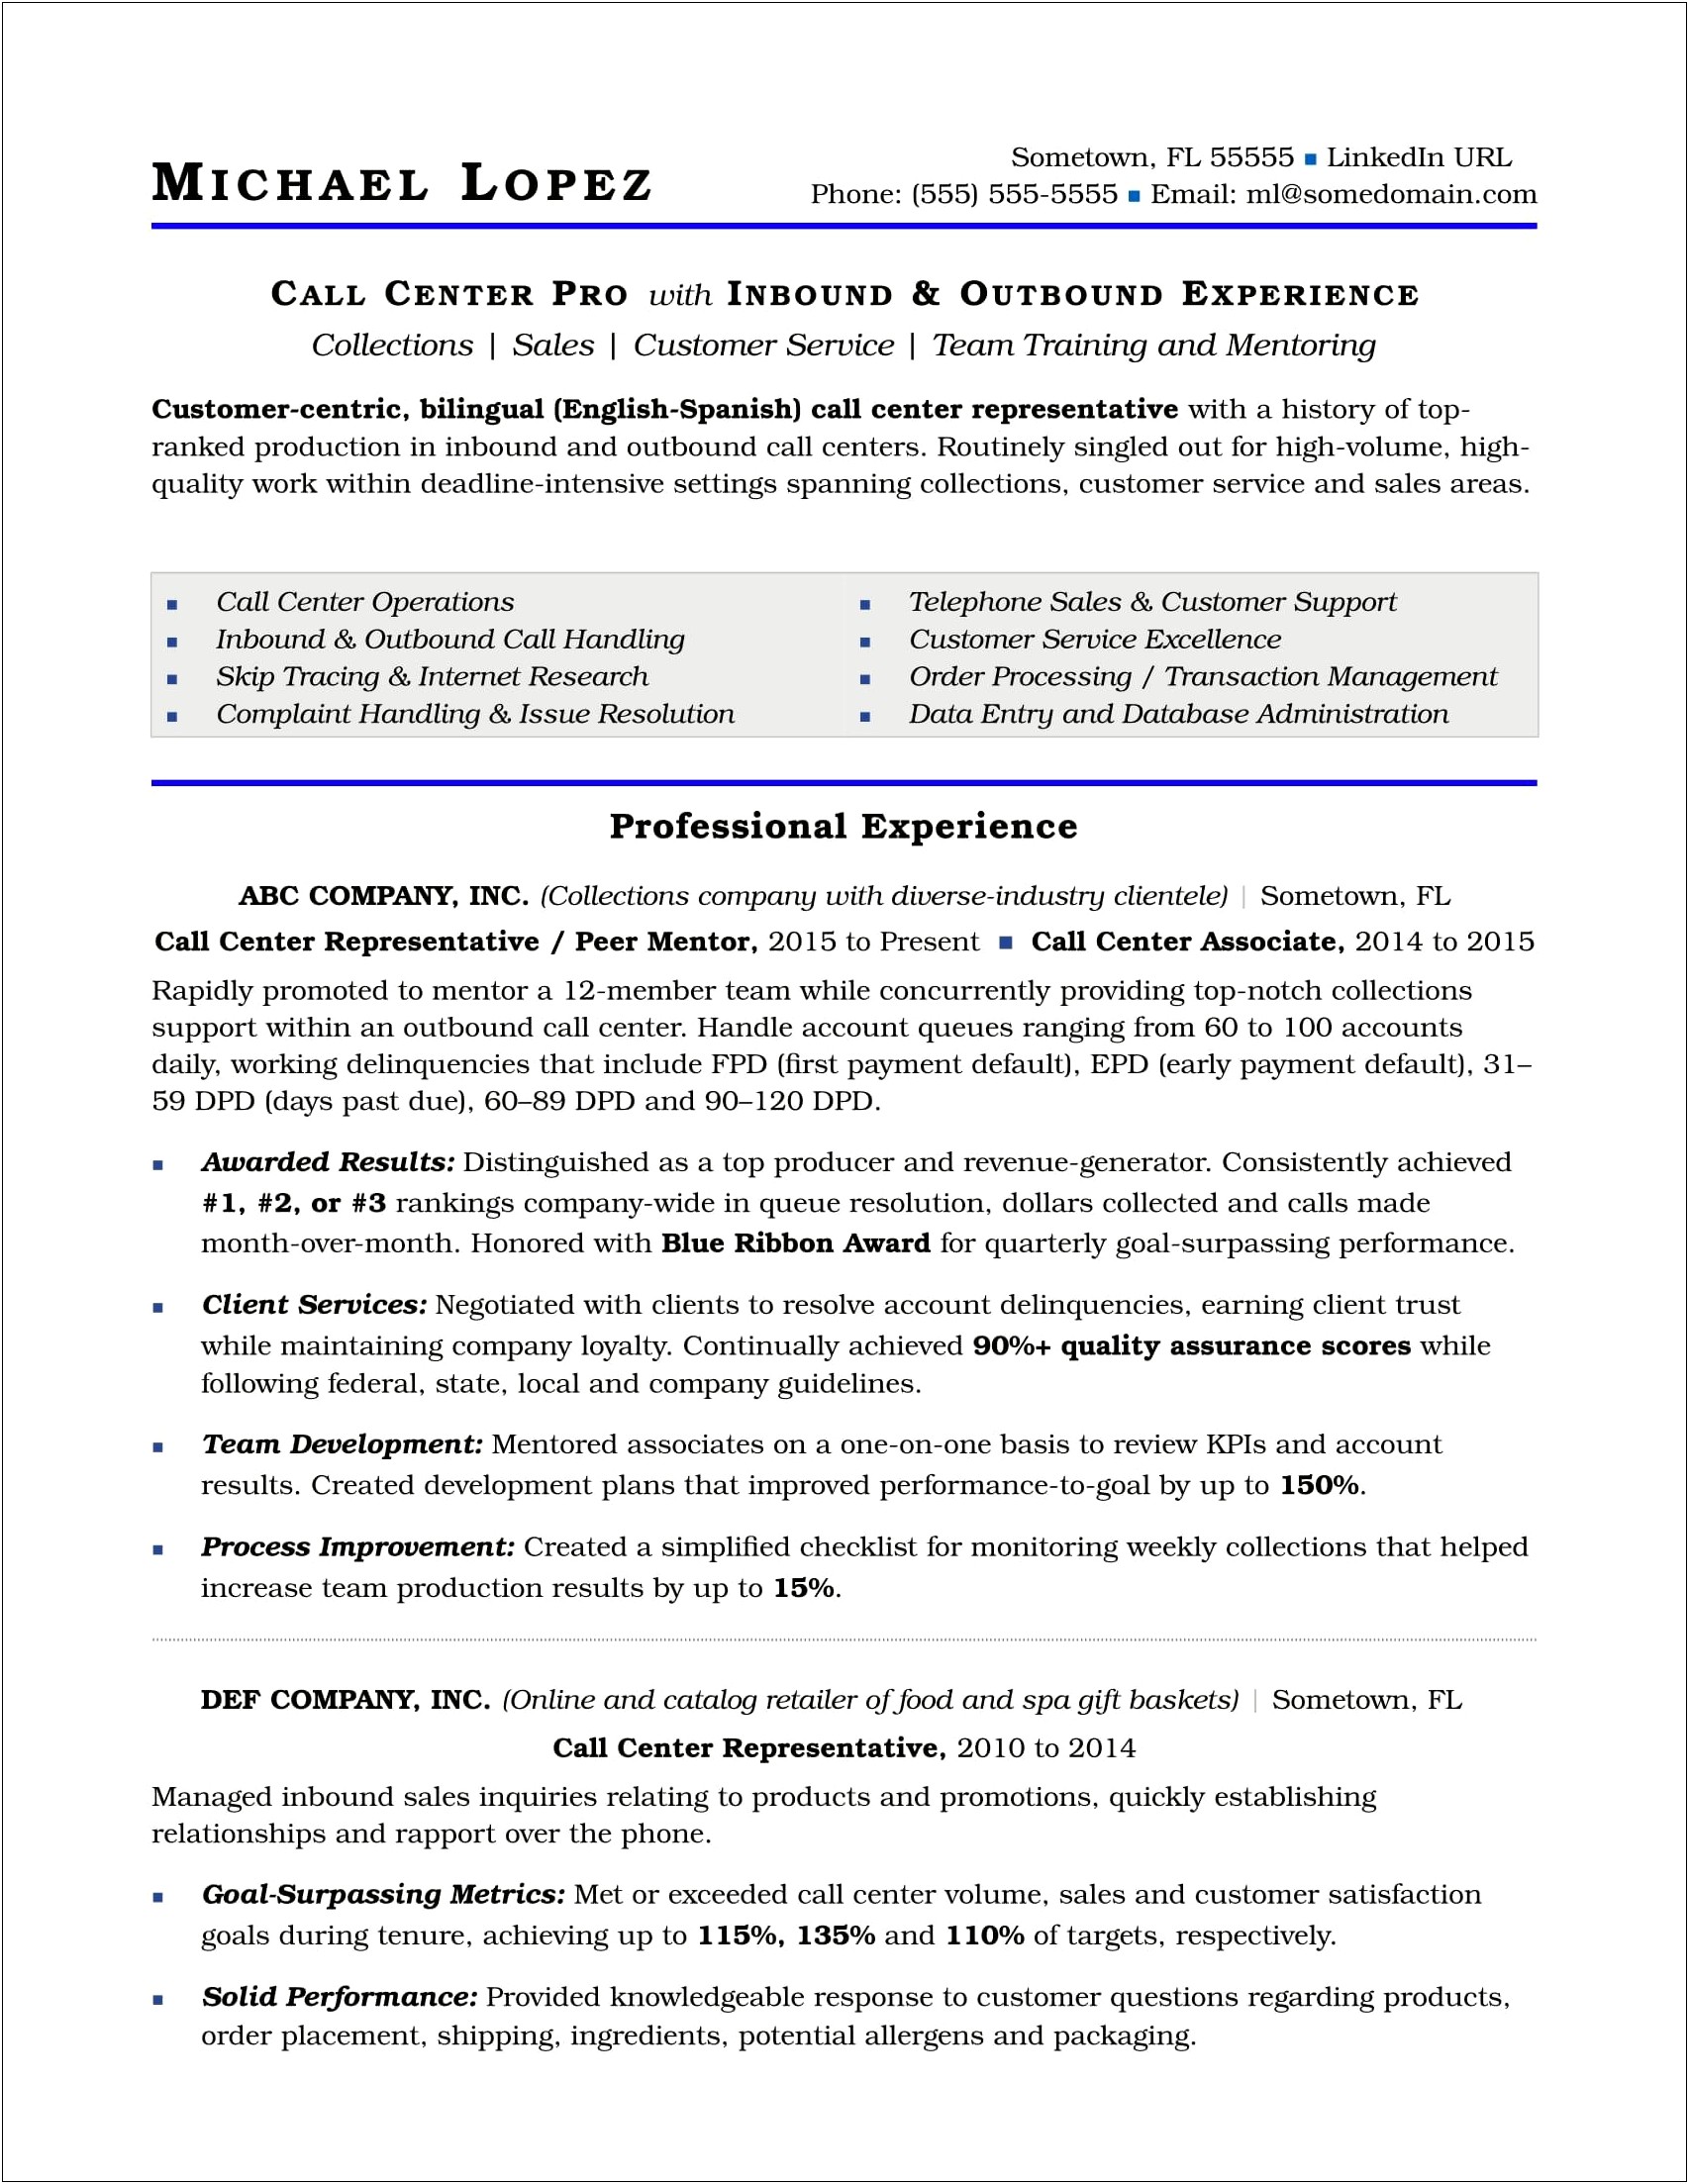 Resume Job Experience List Federal